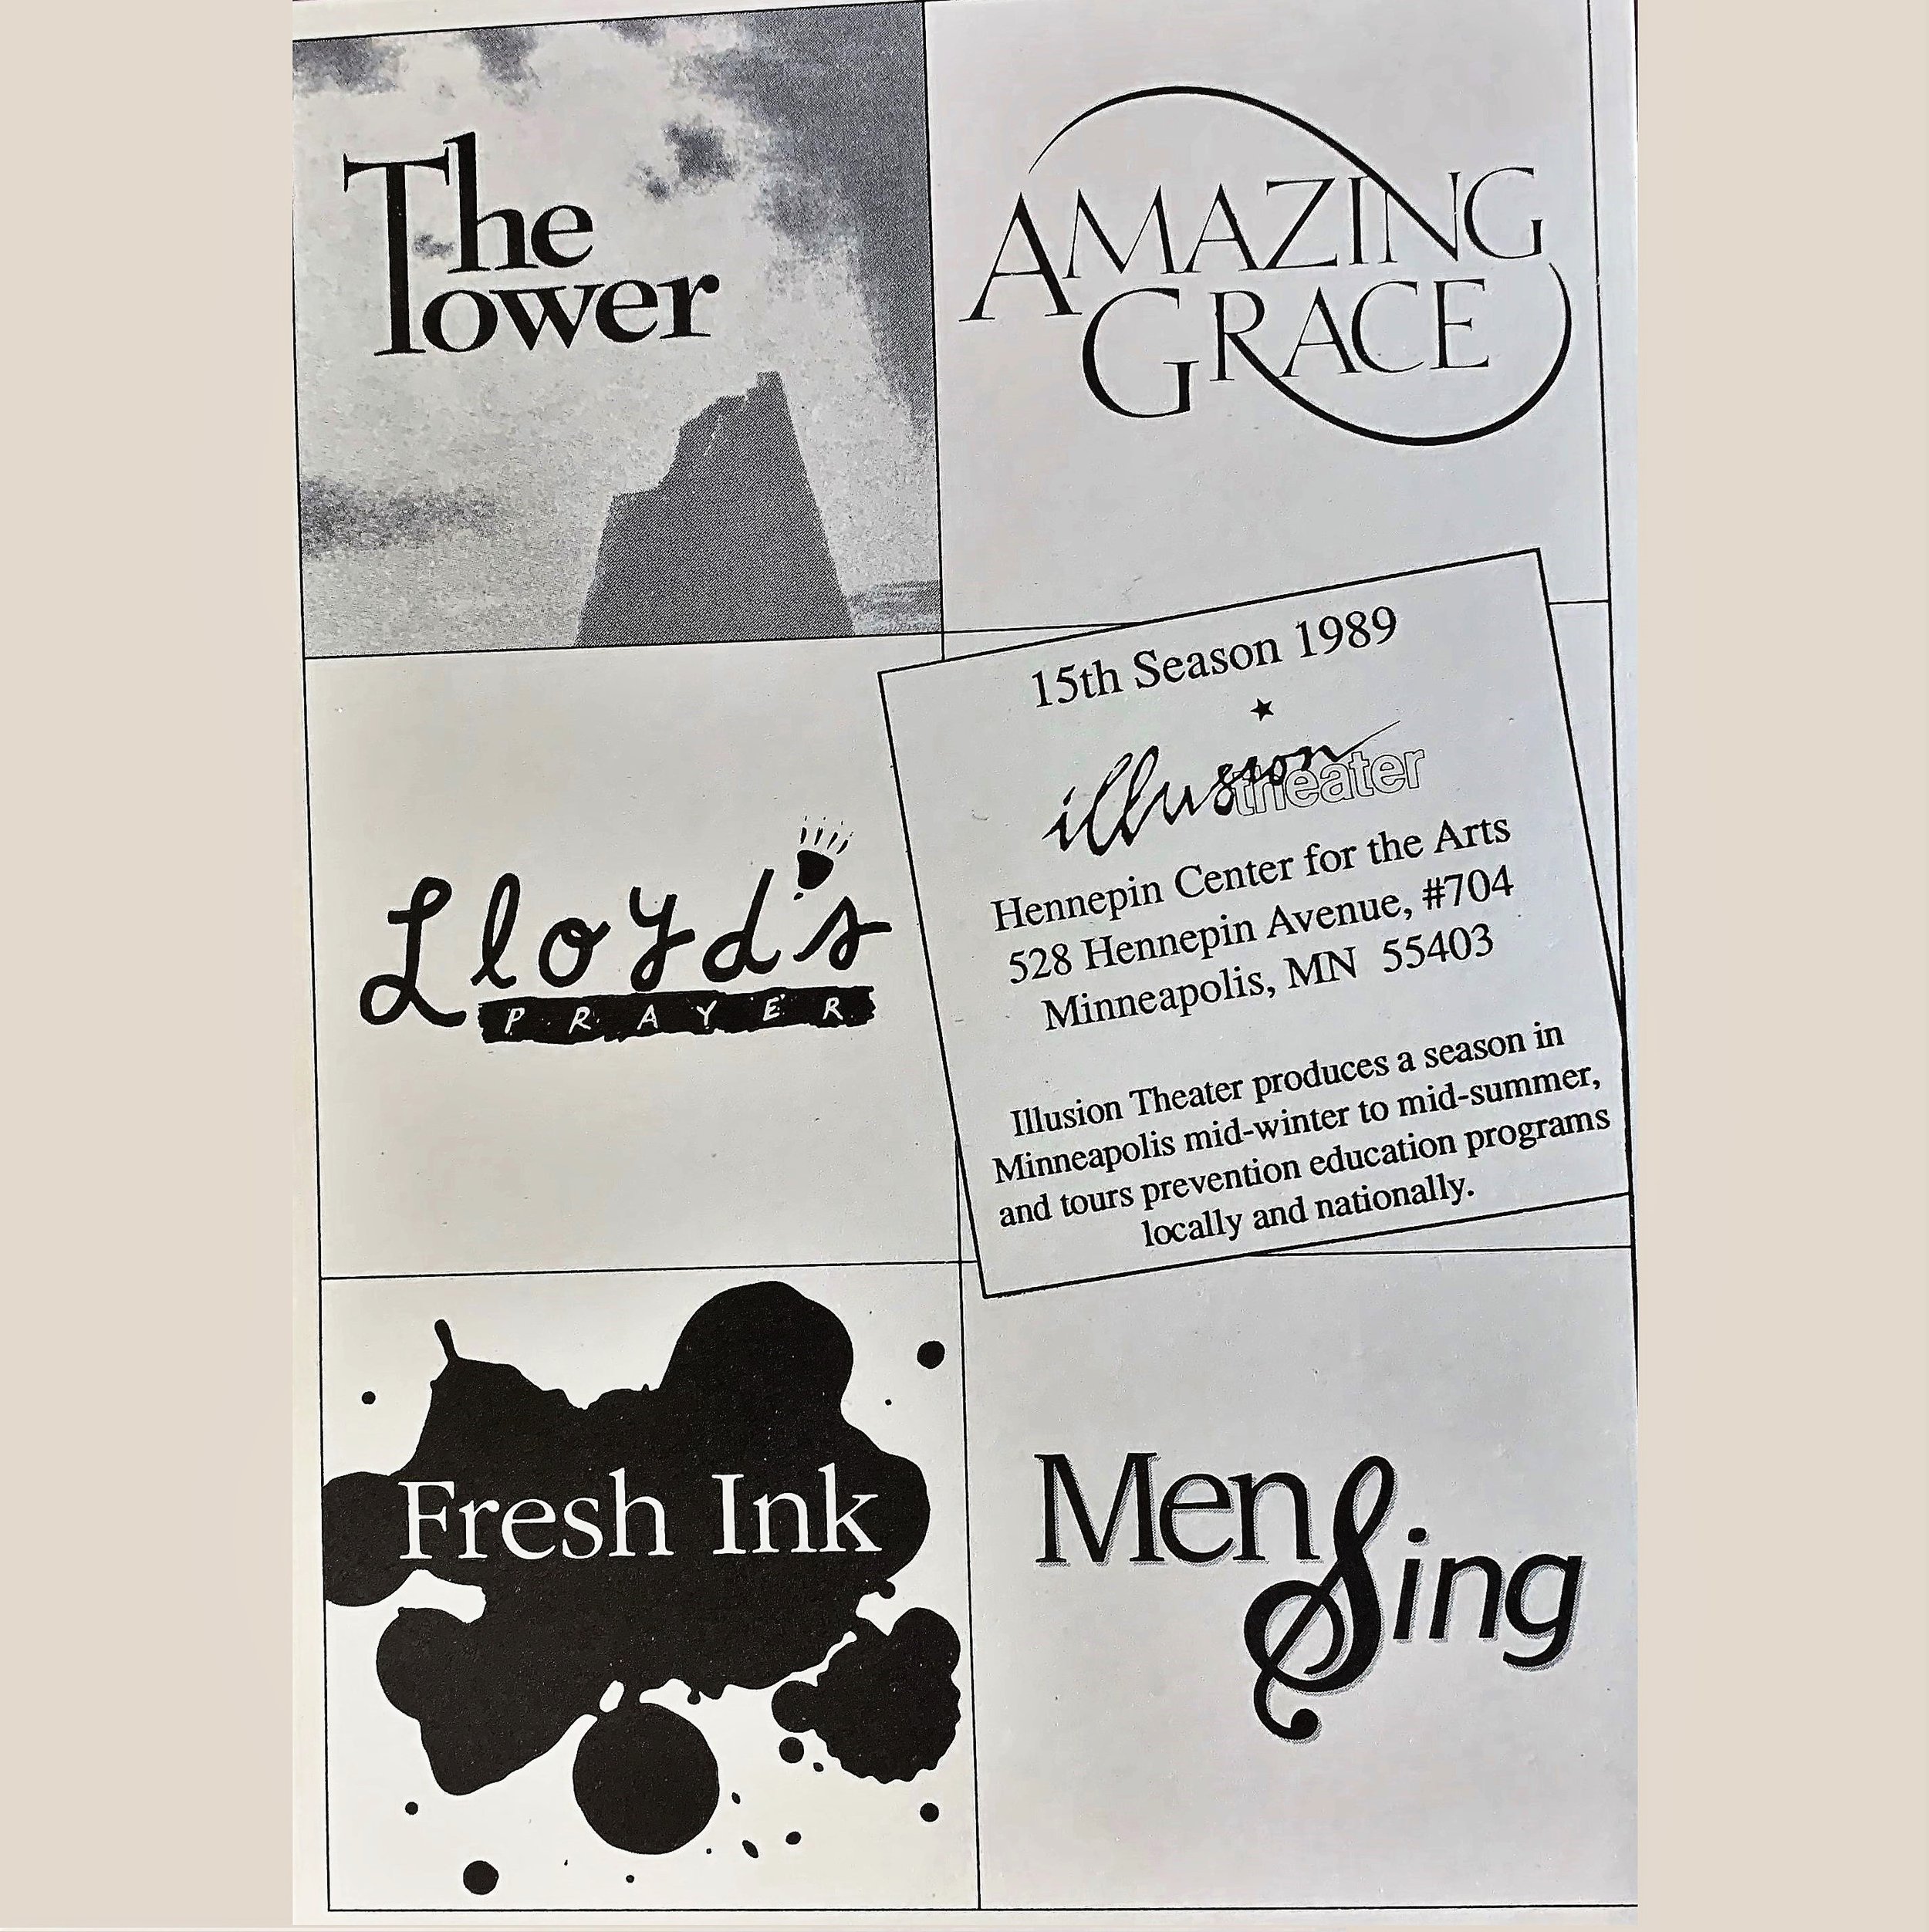 1989 - Season - The Tower, Amazing Grace, Lloyd's Prayer, Men Sing, and Fresh Ink